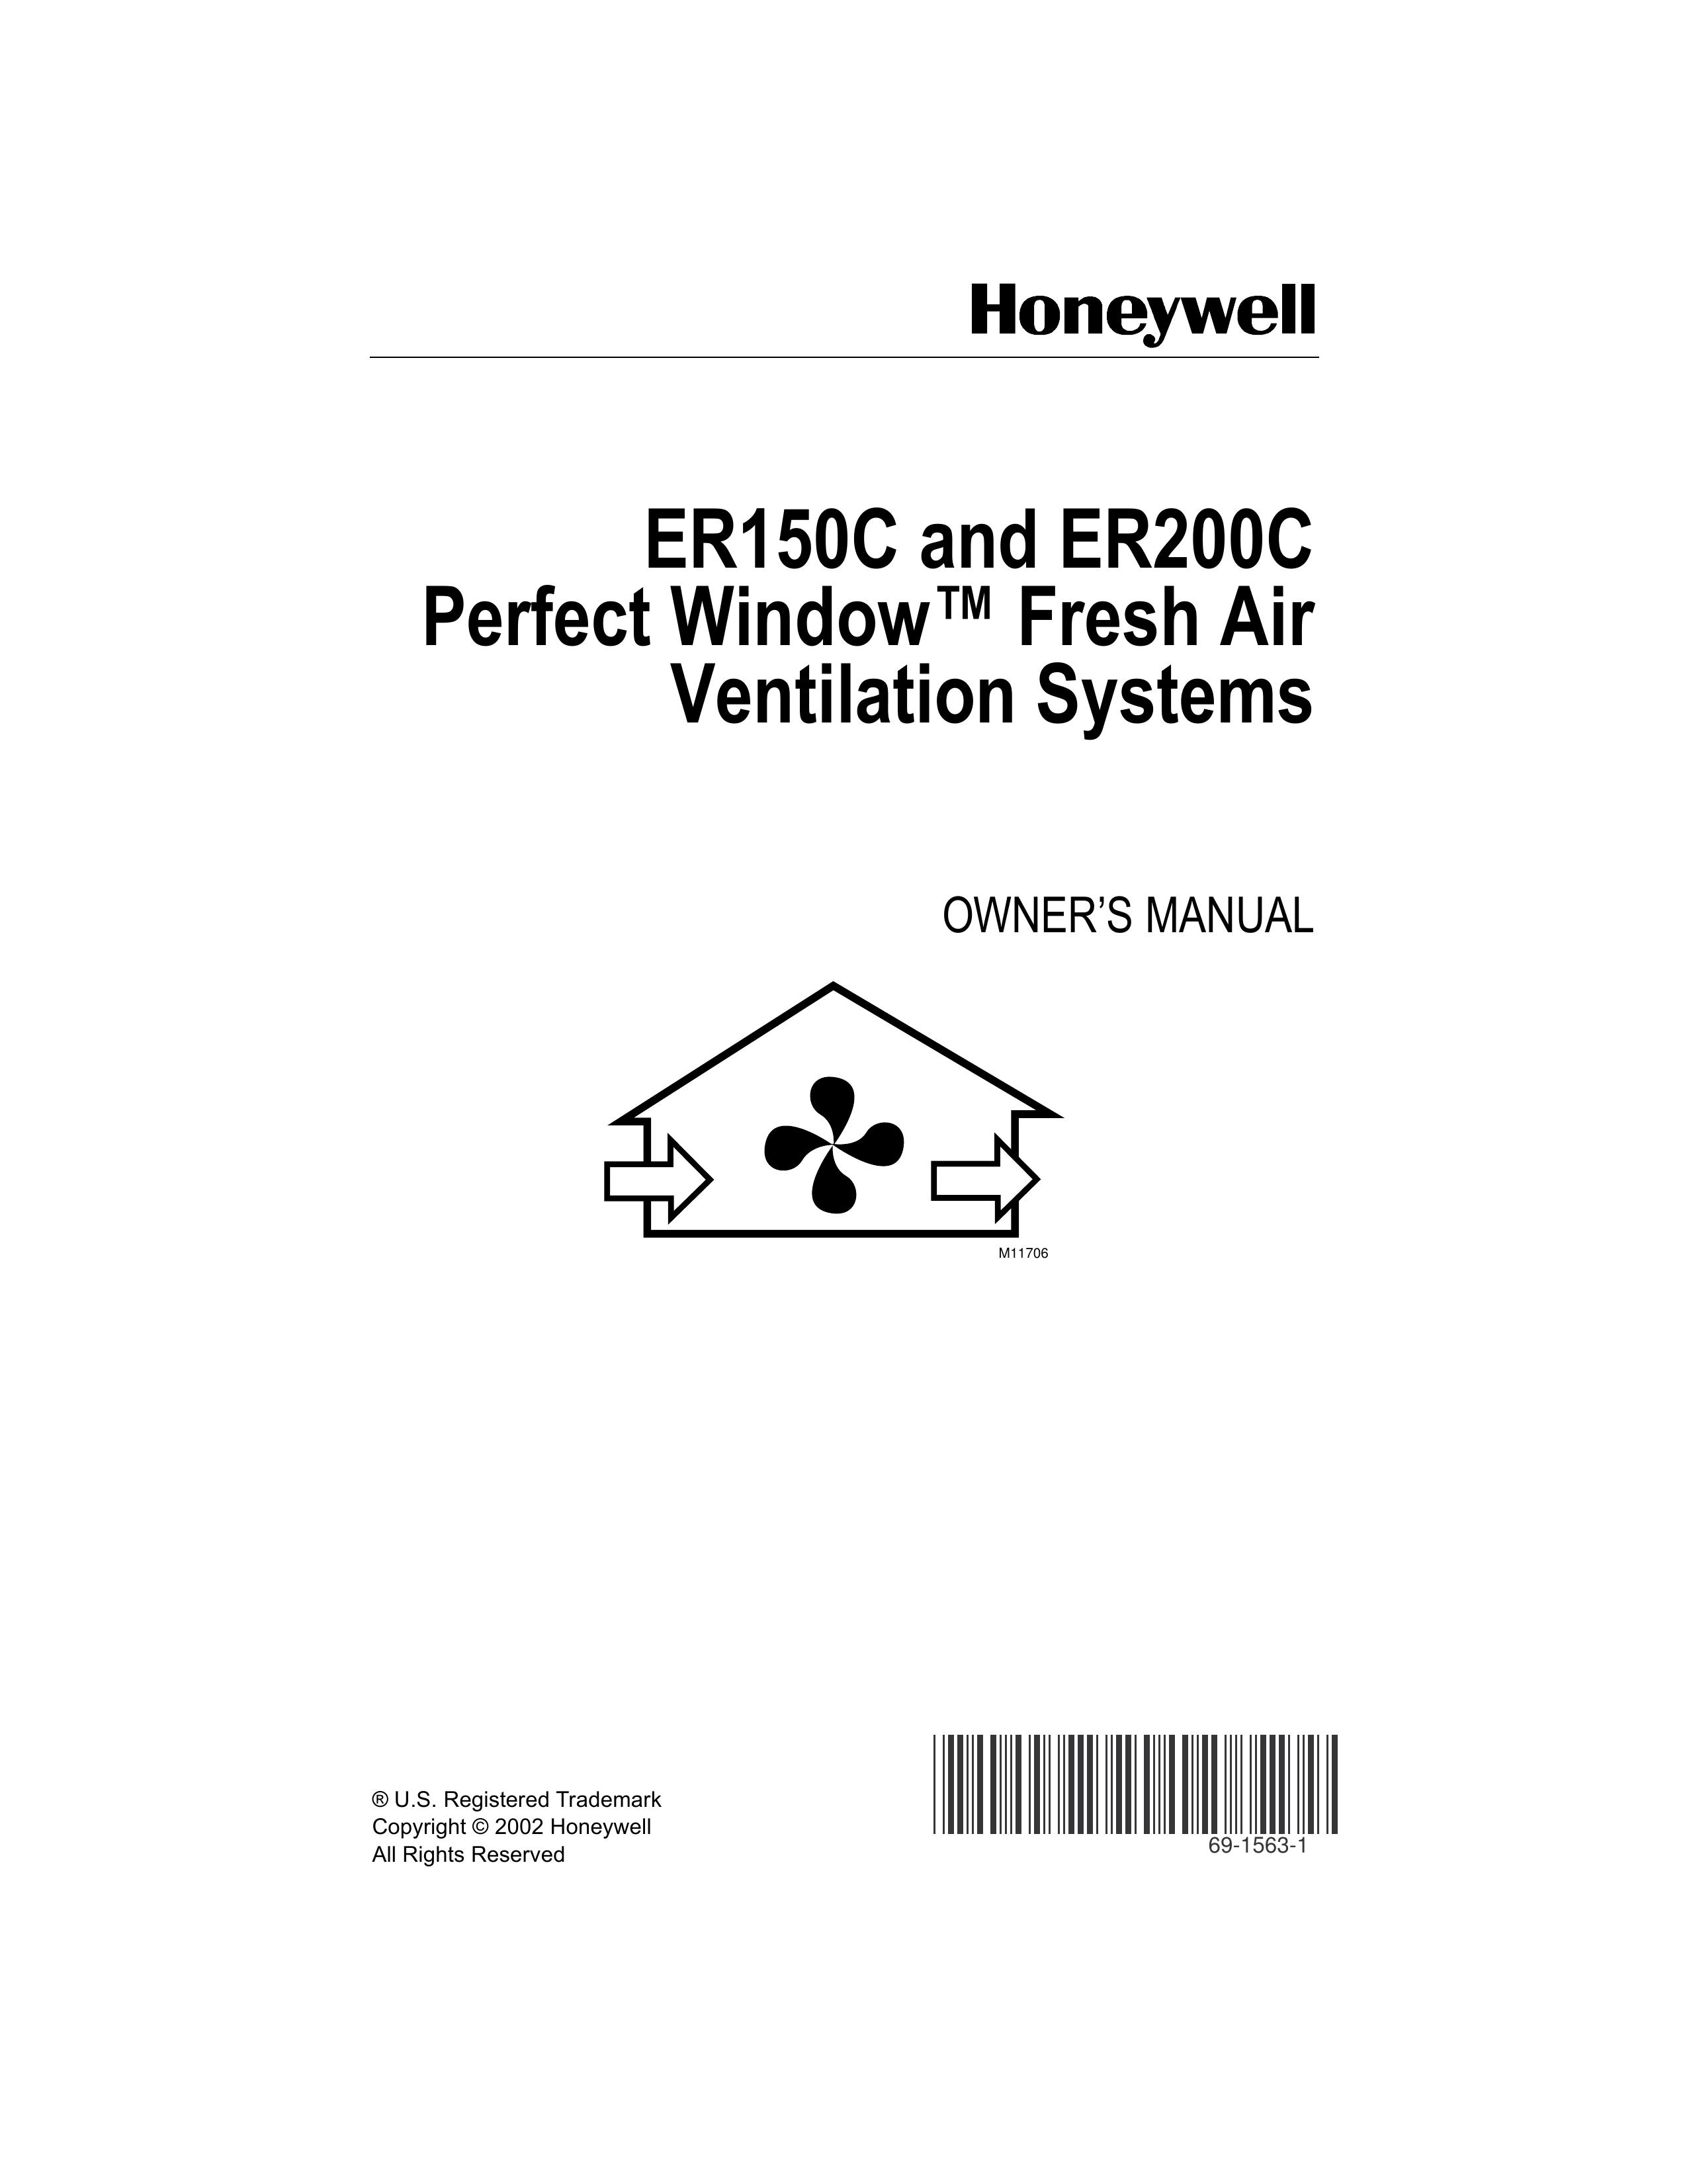 Honeywell ER200C Ventilation Hood User Manual